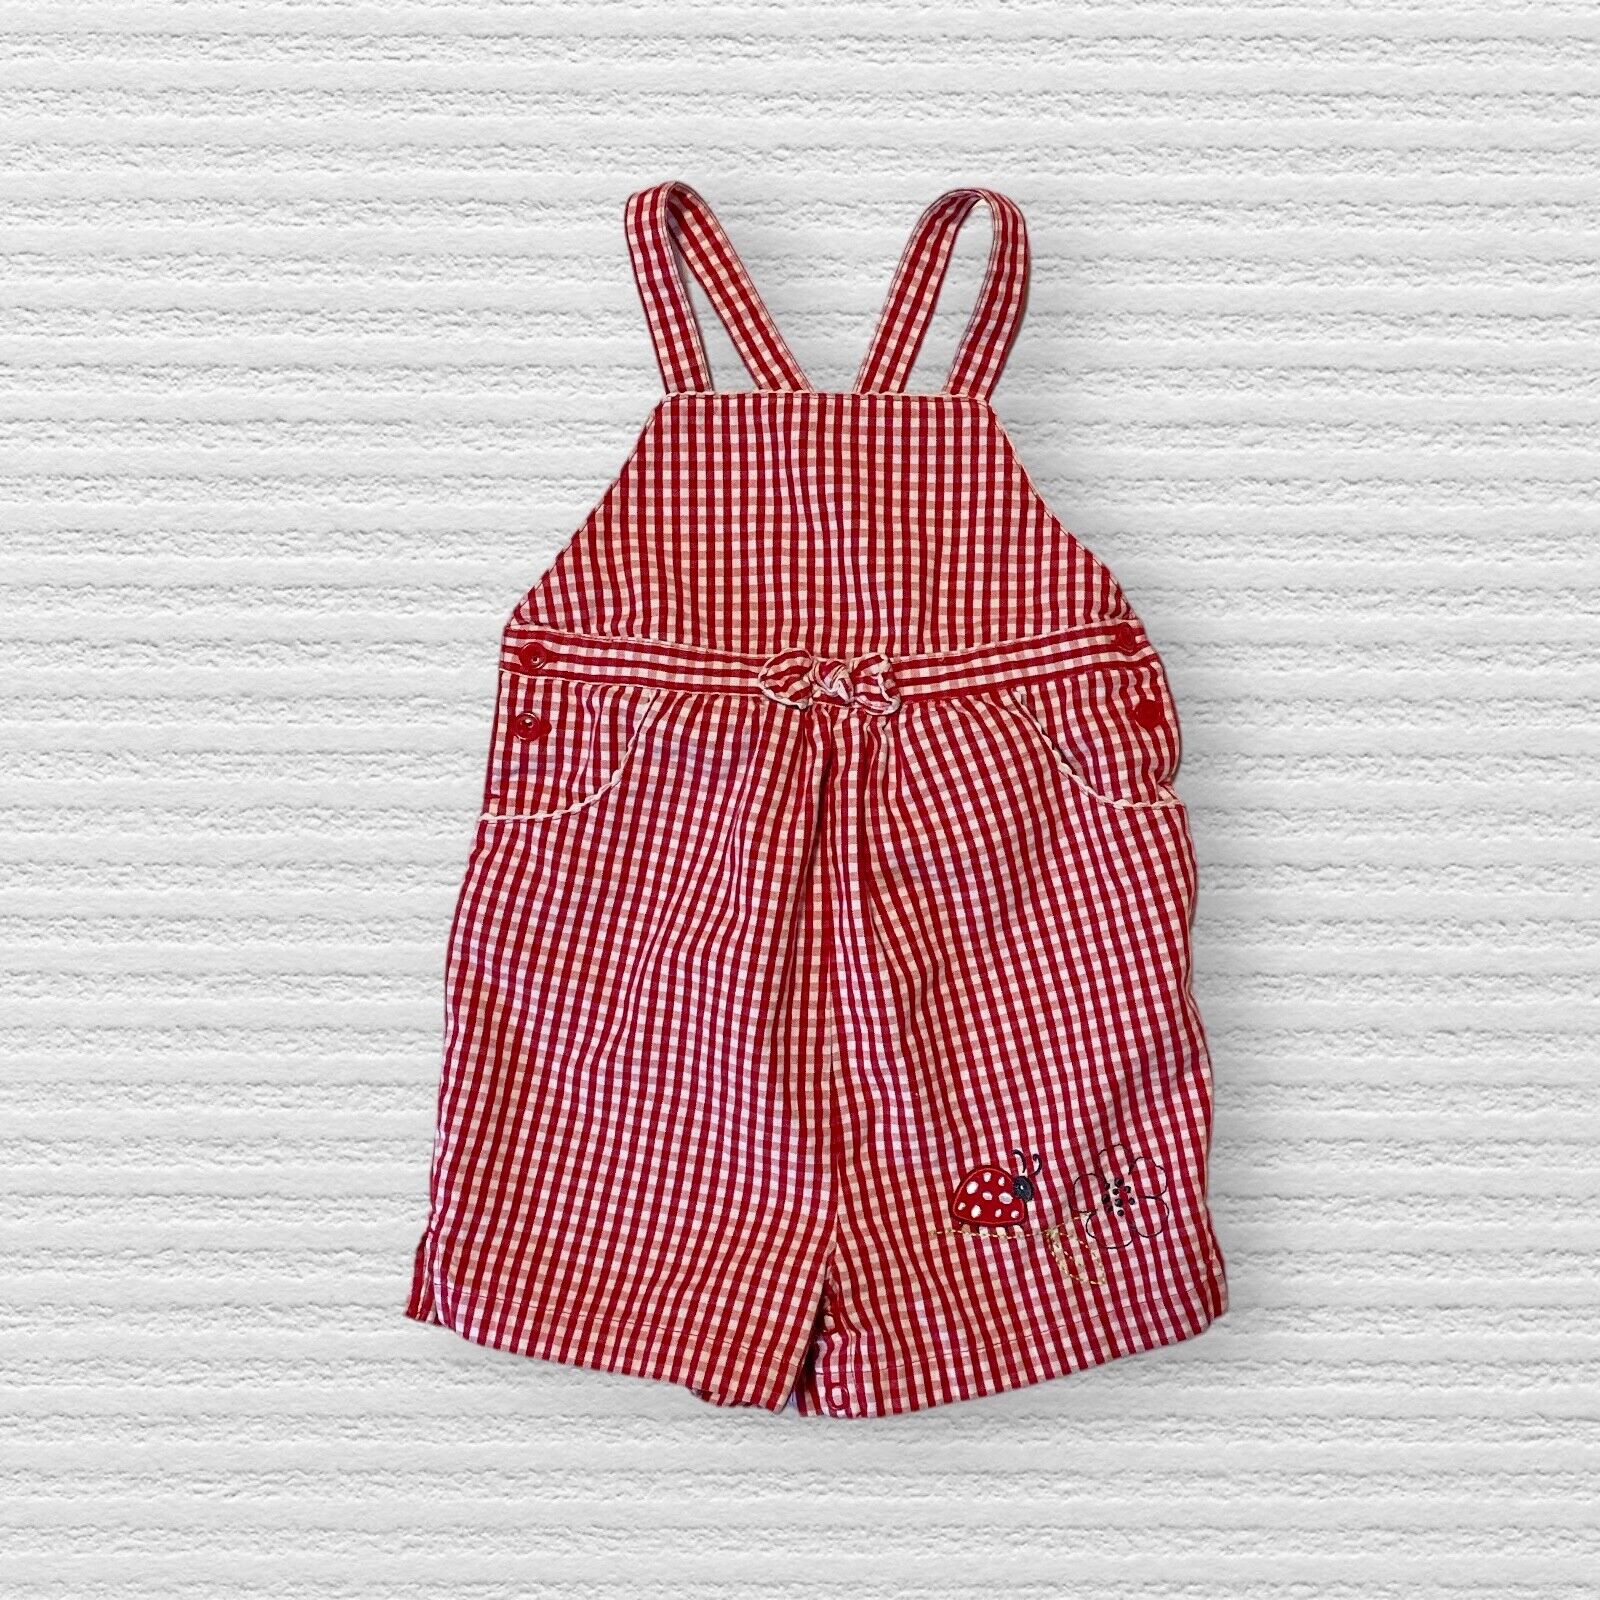 Vintage Gymboree Baby Toddler Girls Gingham Romper Red White Kid Size 18-24M